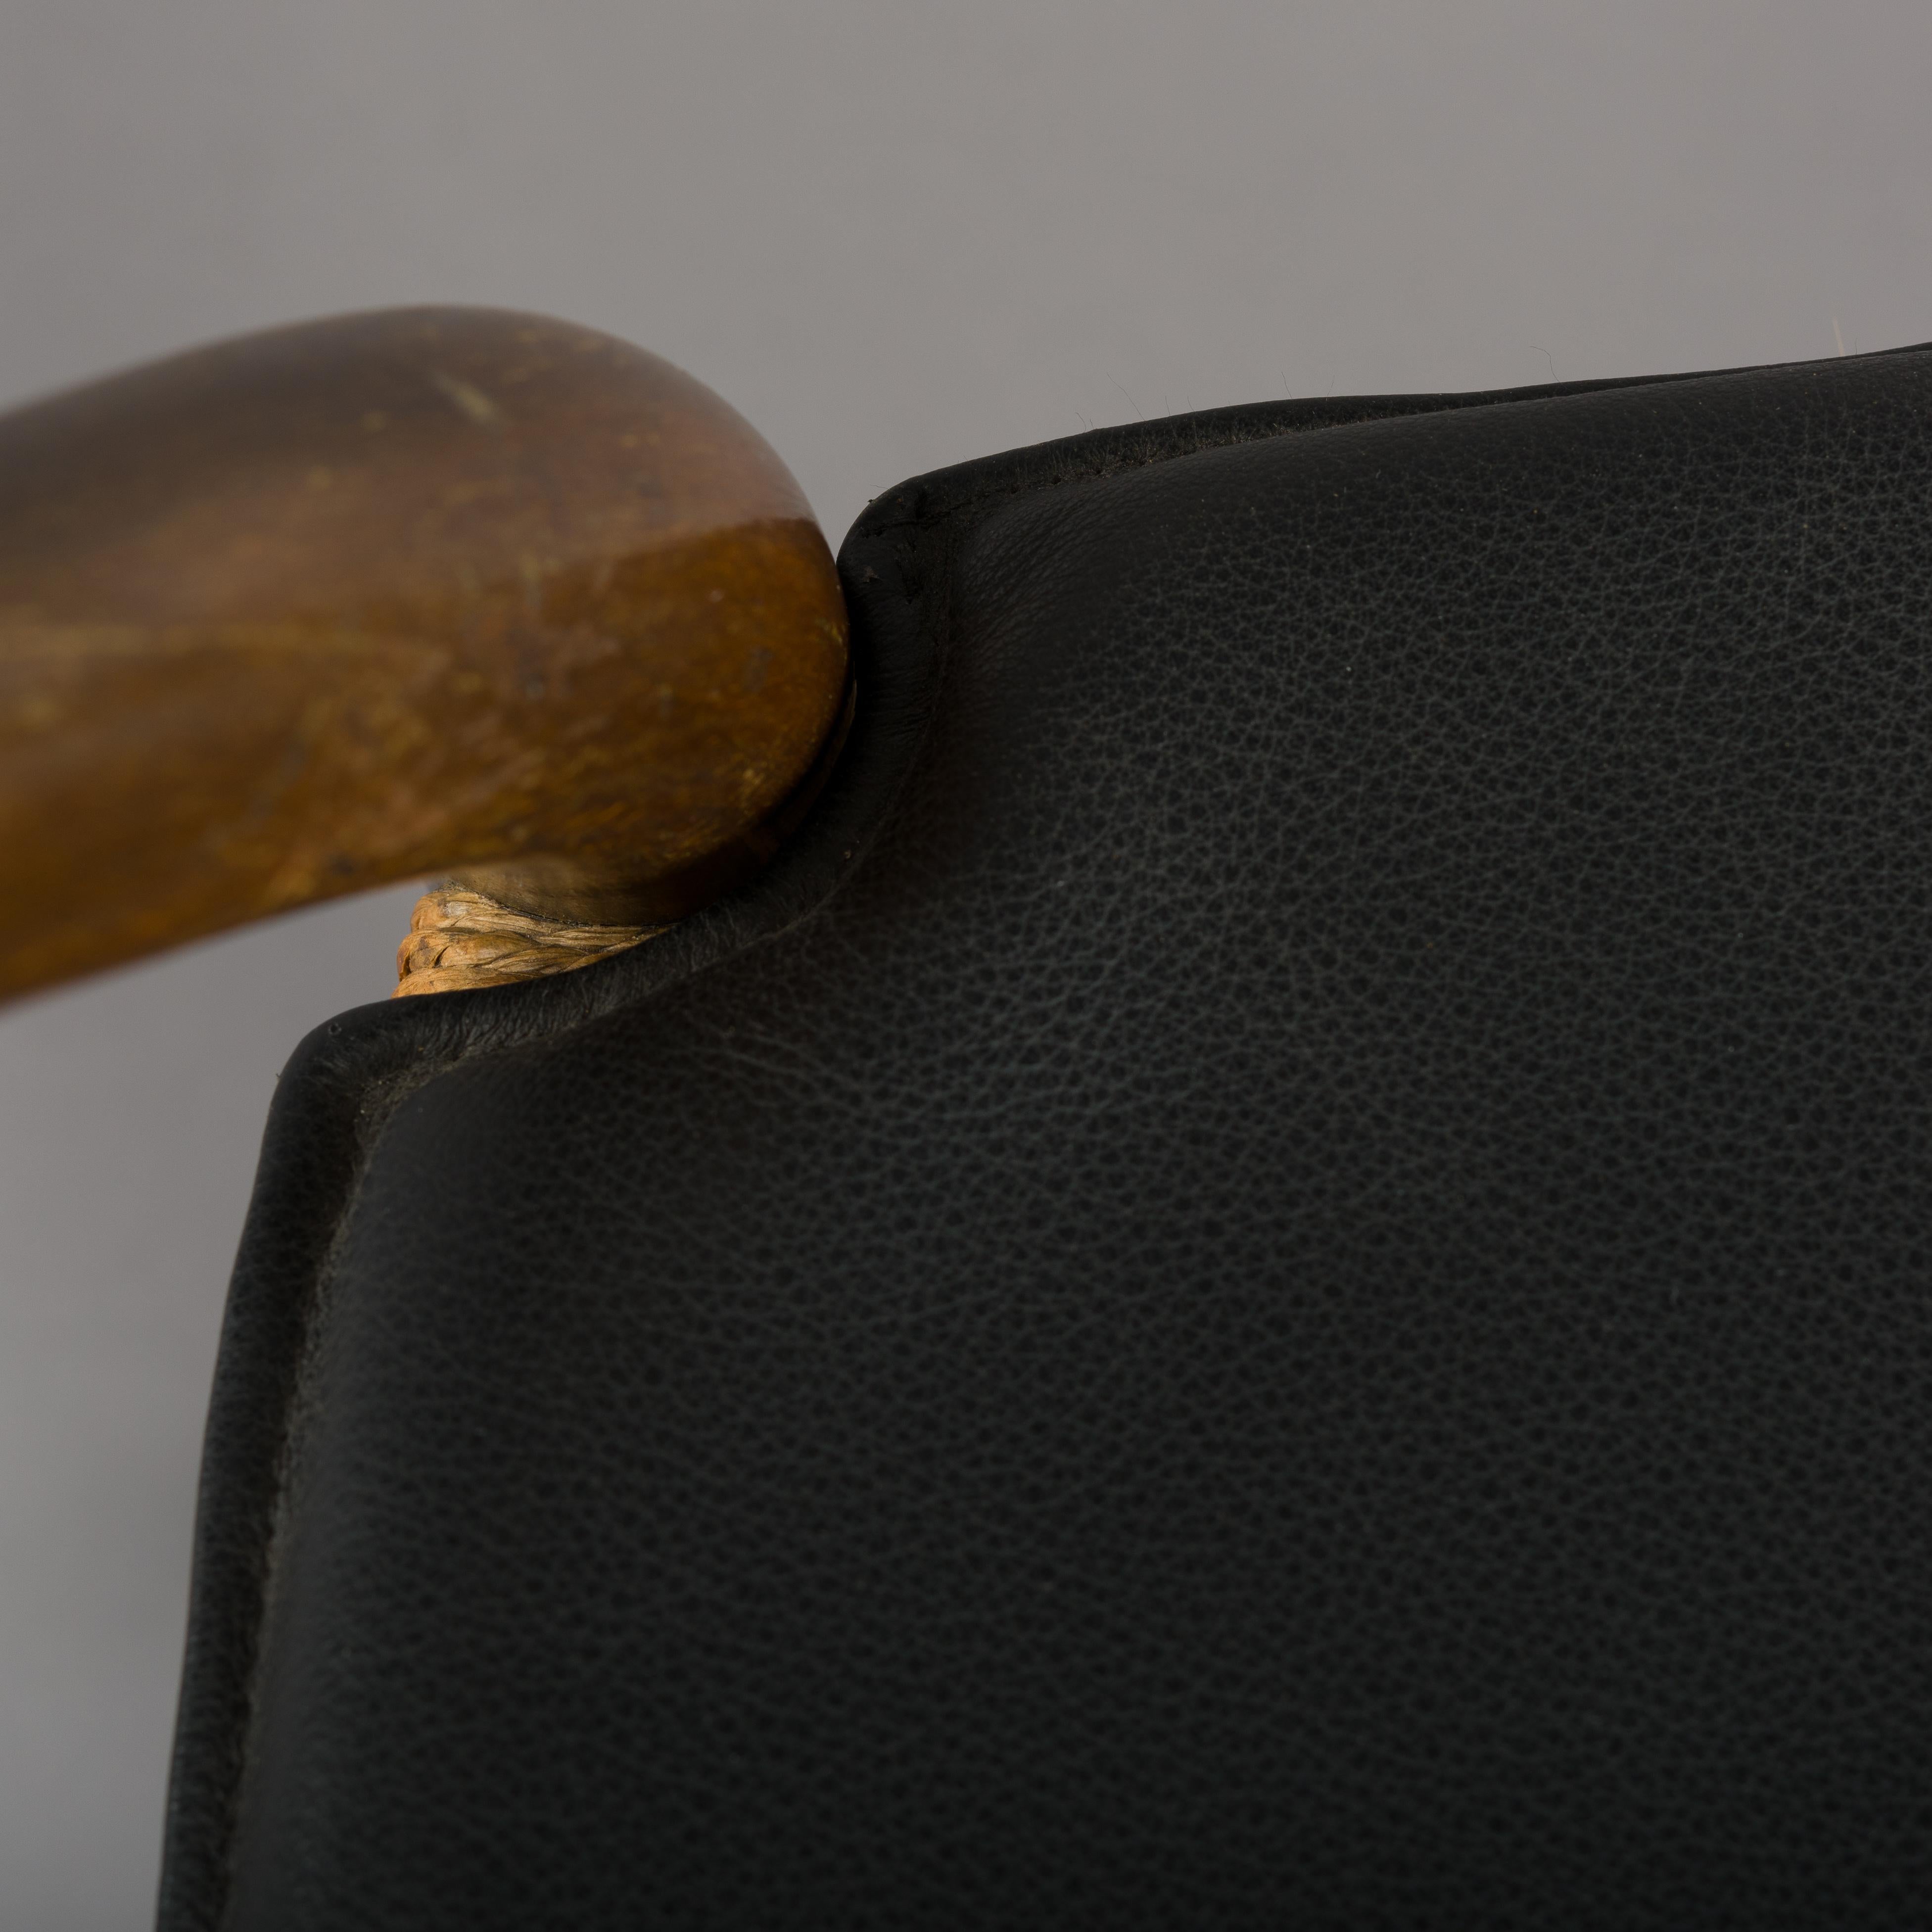 Midcentury CH24 Wishbone Chairs by Hans J. Wegner for Carl Hansen & Søn Made in 7